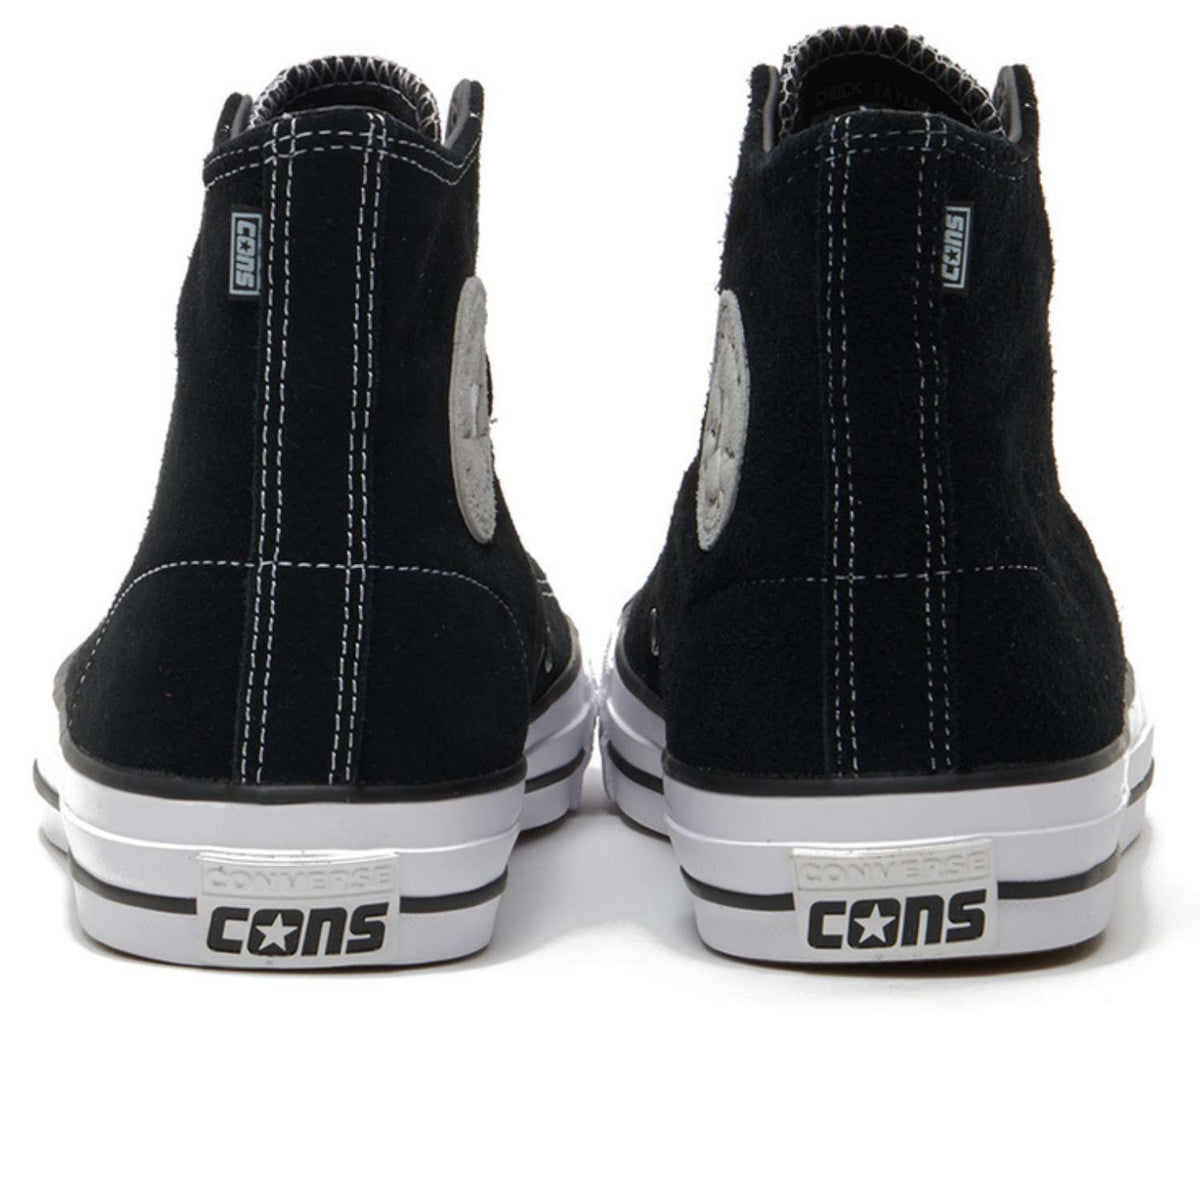 Converse CTAS Pro Hi - Black/Black/White 159573C